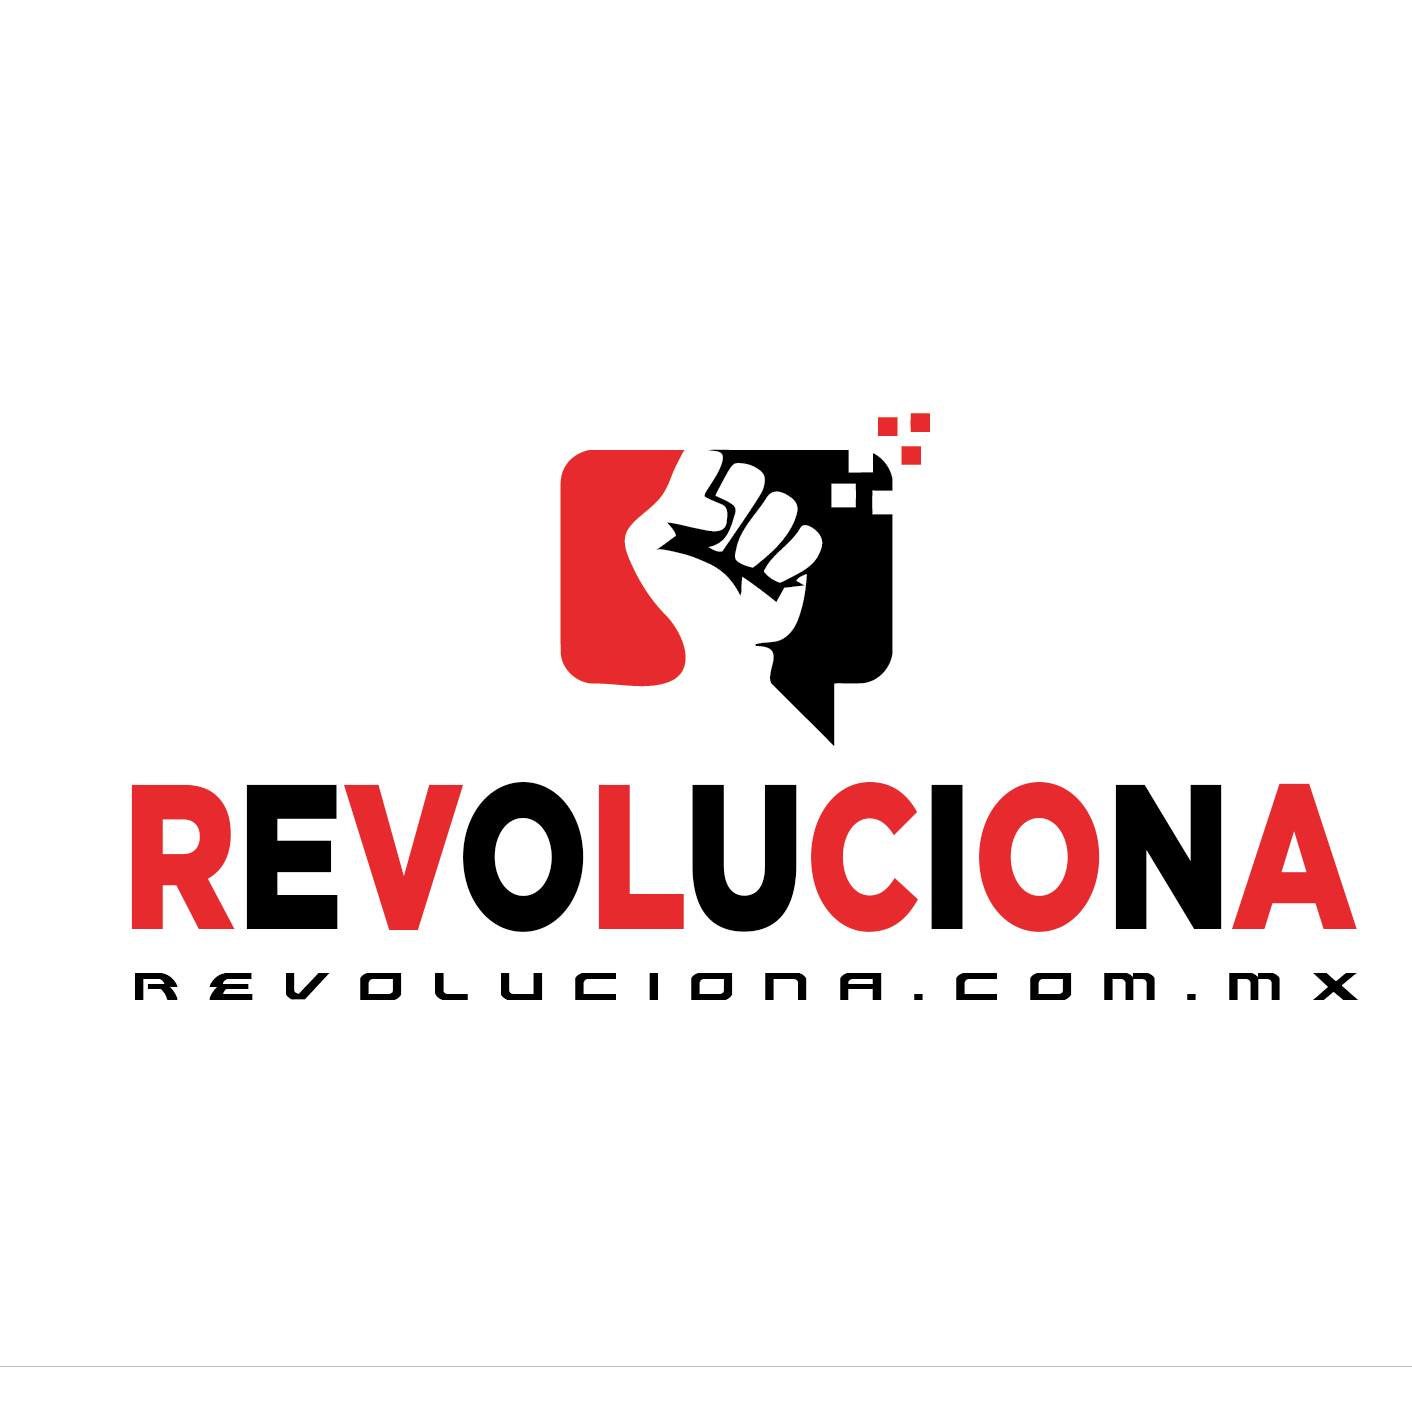 Revoluciona.com.mx